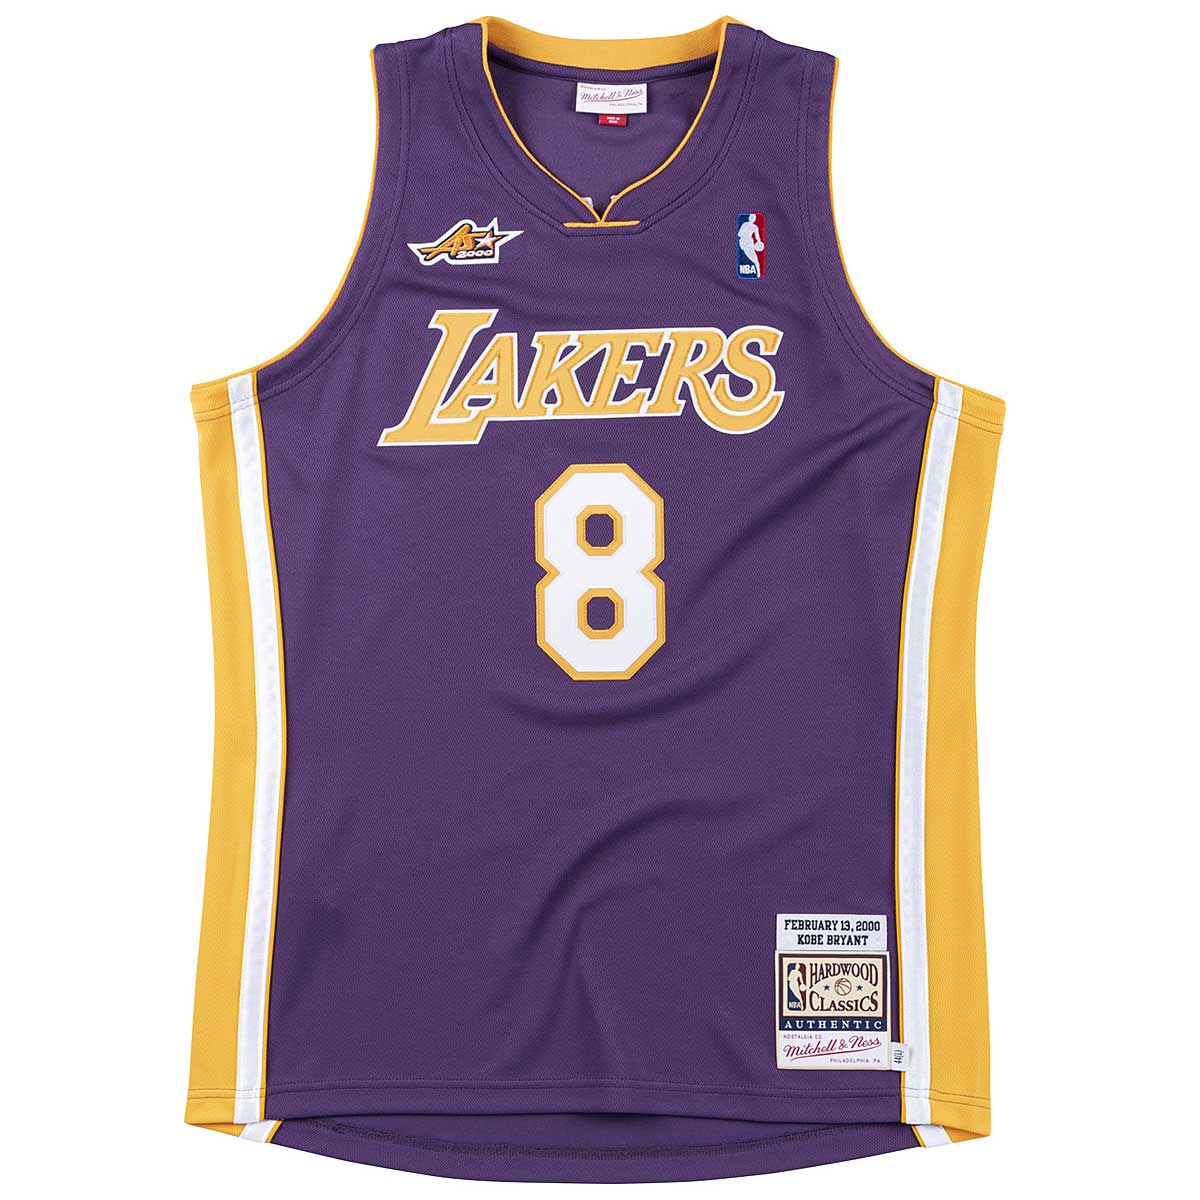 NBA official Champion 52 Lakers jersey #8 Bryant. Believe its a 1999/ Kobe  Bryant - Jerseys